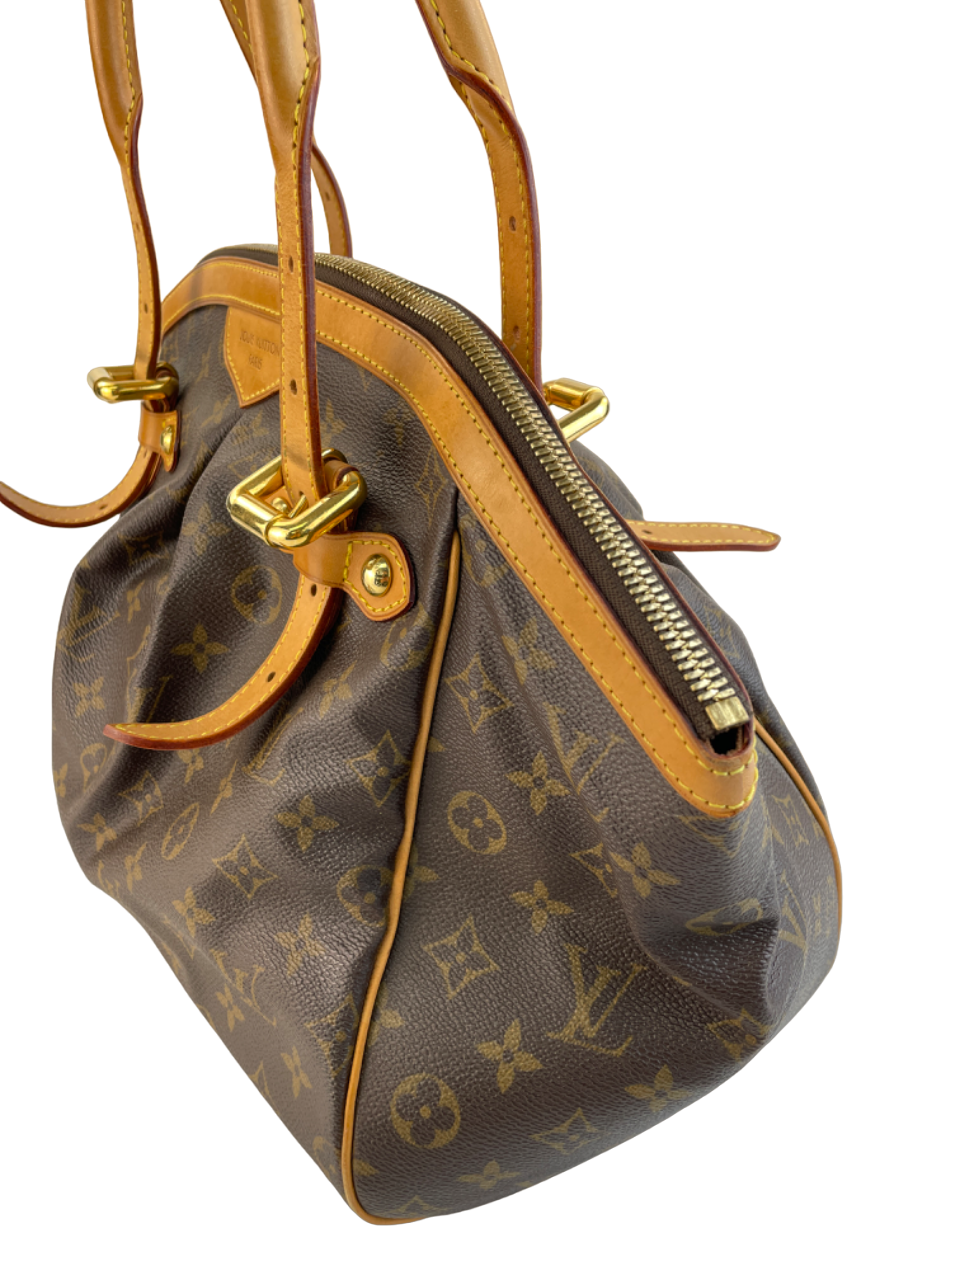 Louis Vuitton, Bags, Louis Vuitton Monogram Canvas Tivoli Gm Bag